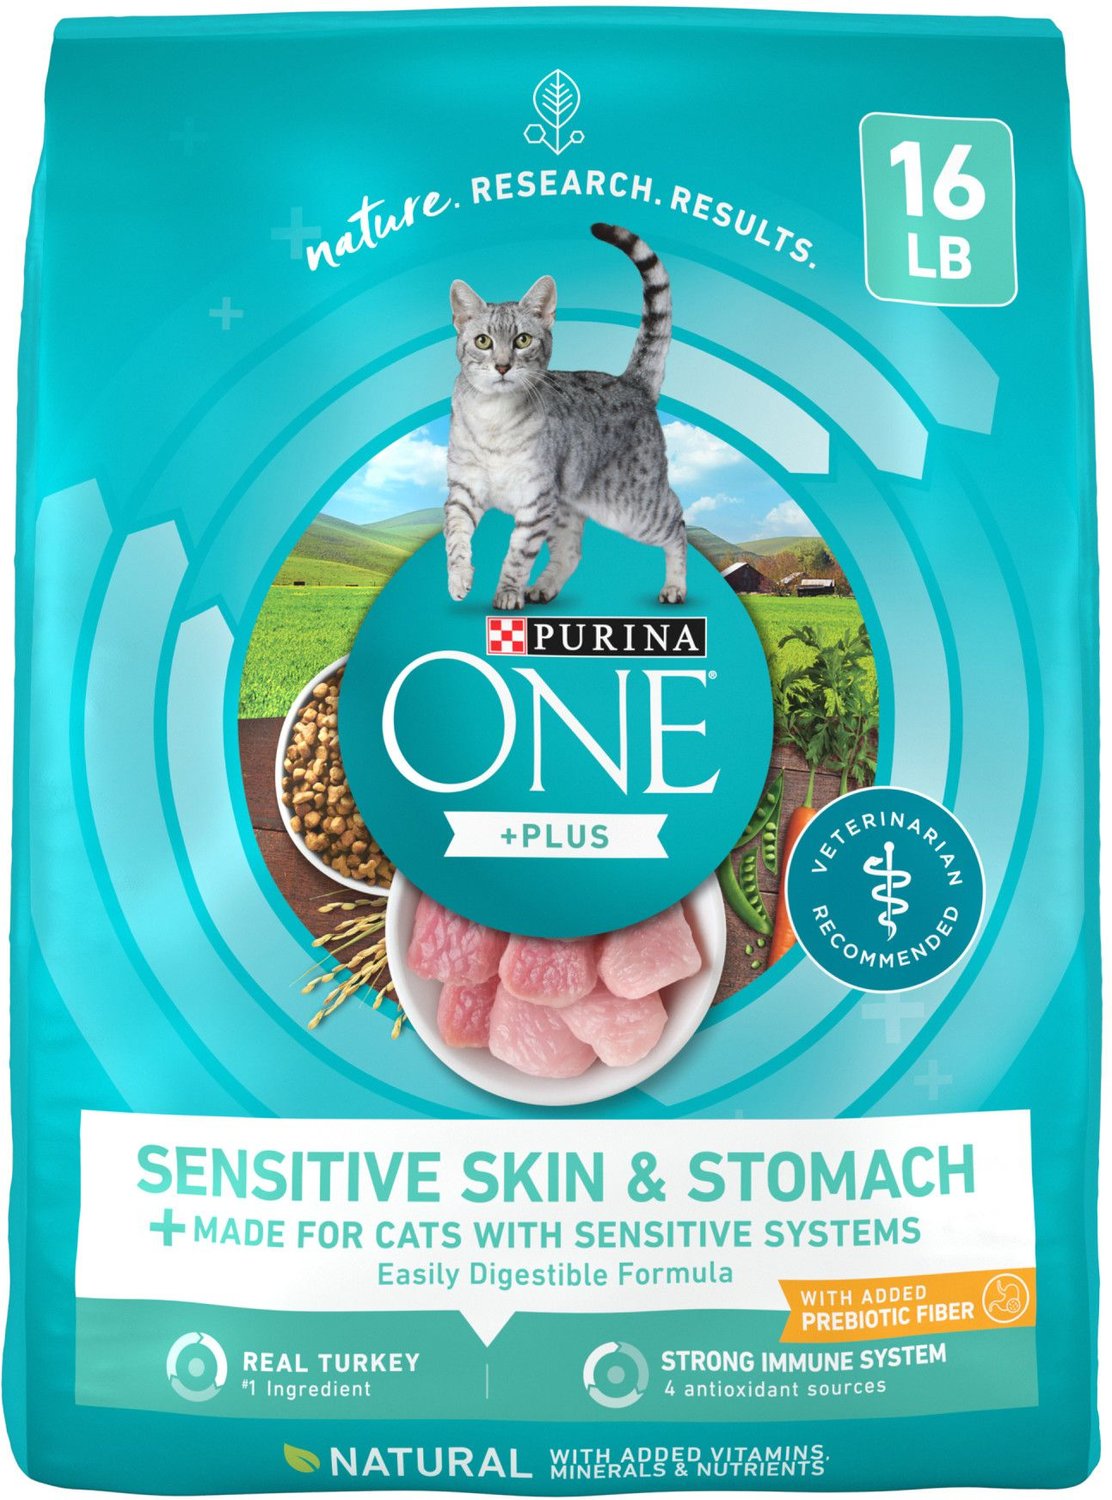 PURINA ONE Sensitive Skin & Stomach Dry Cat Food, 16lb bag